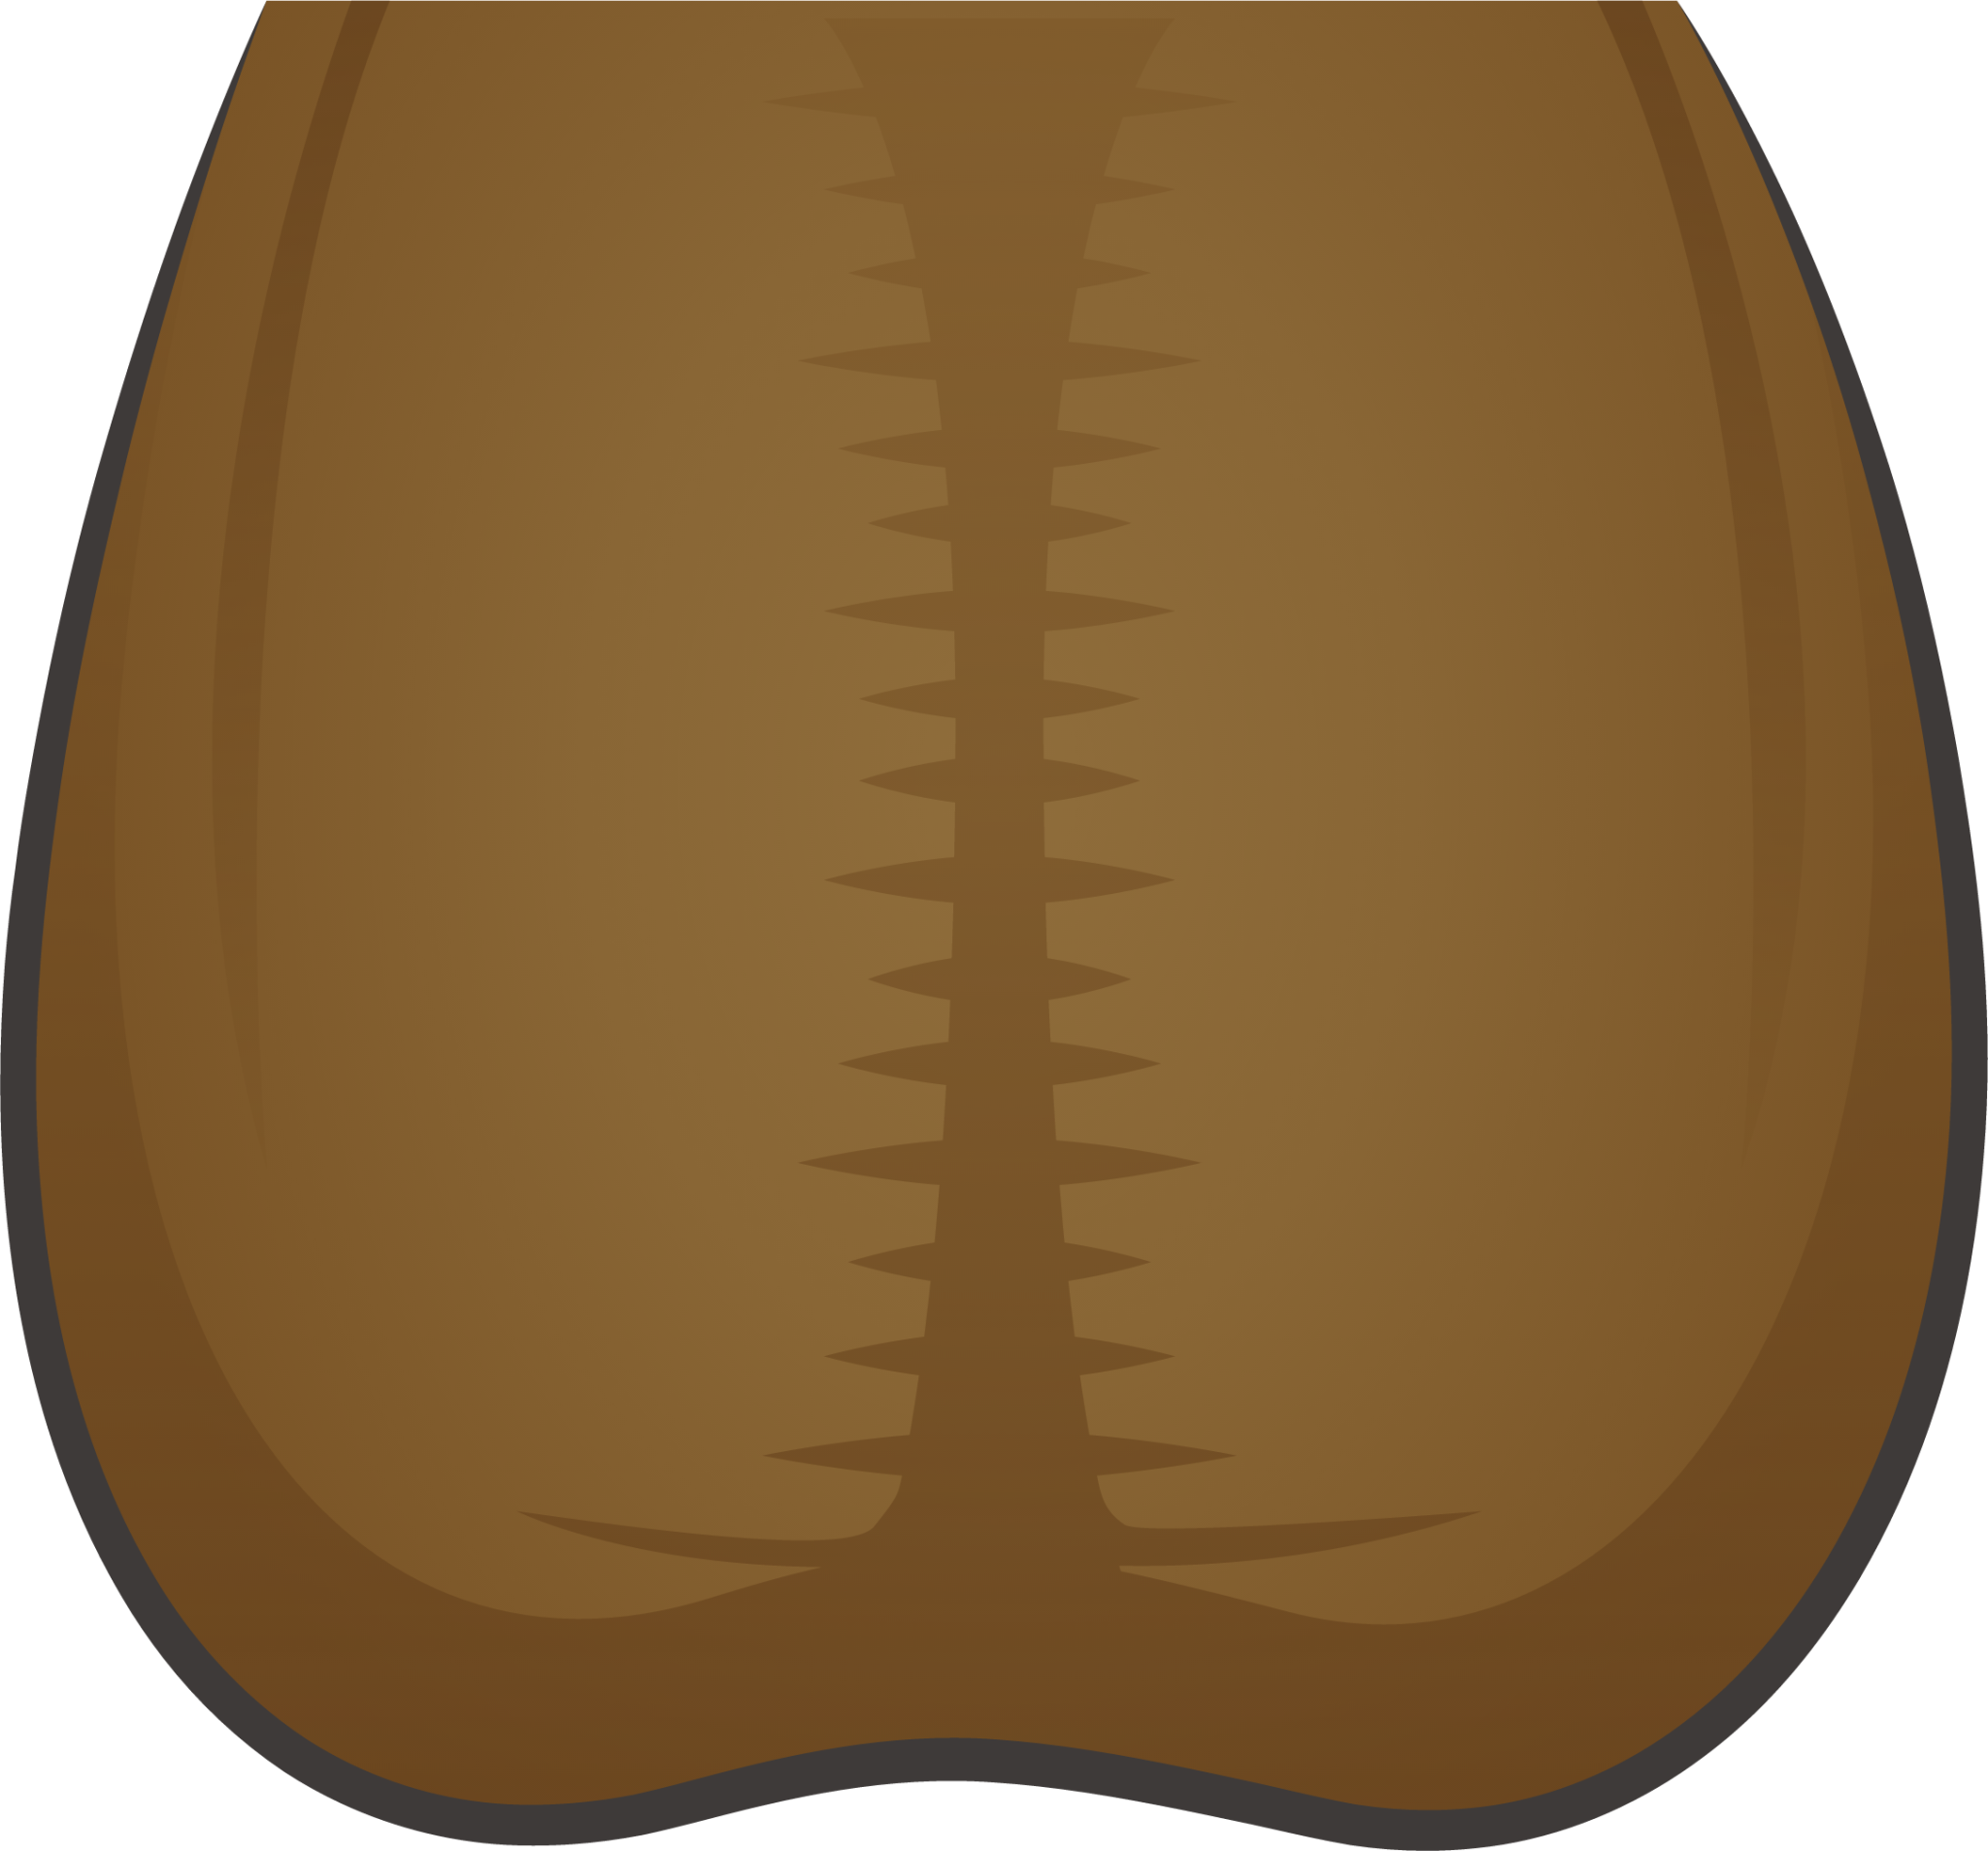 testicles (brown) emoji